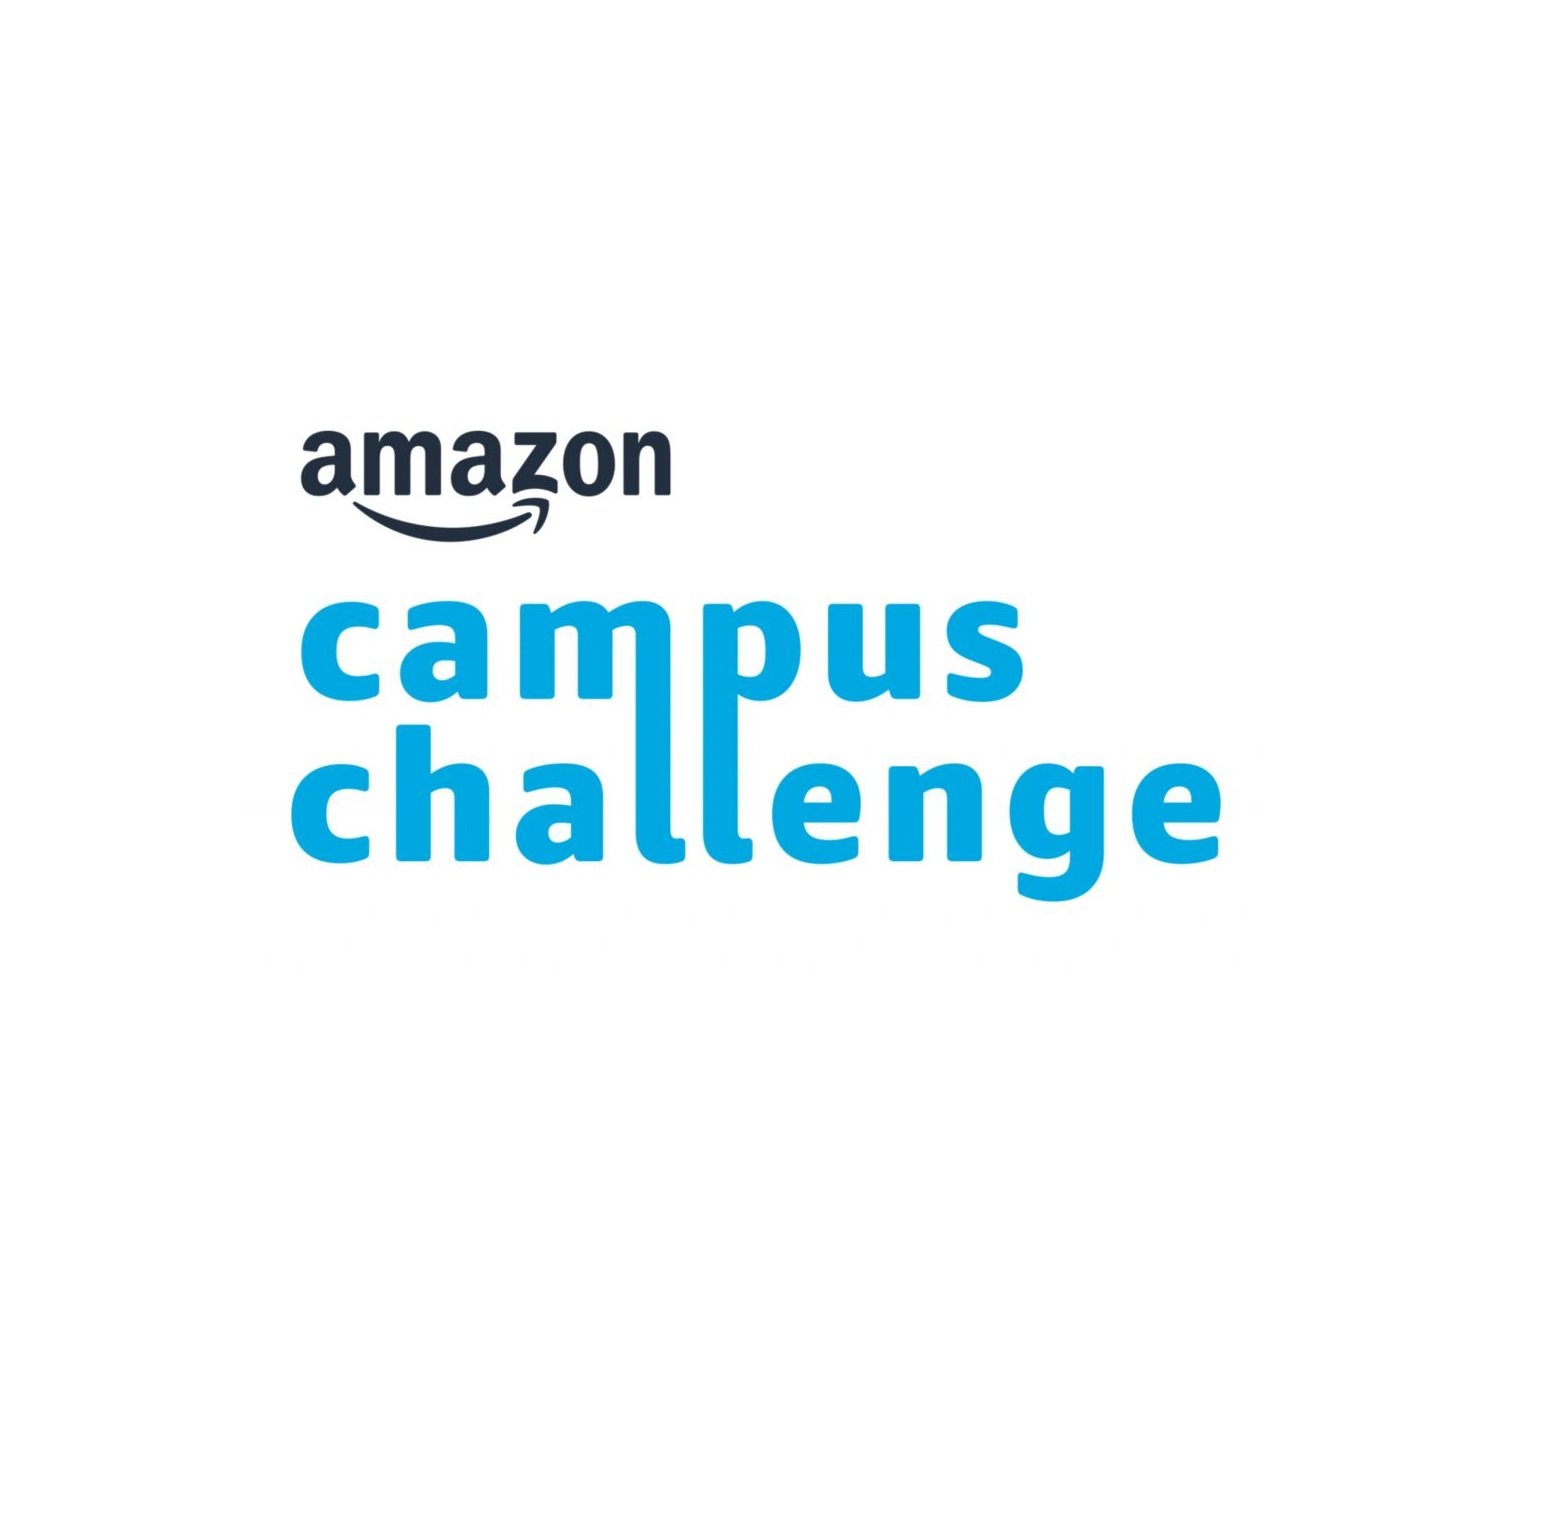 EasyVal guanya l'edició espanyola d'Amazon Campus Challenge